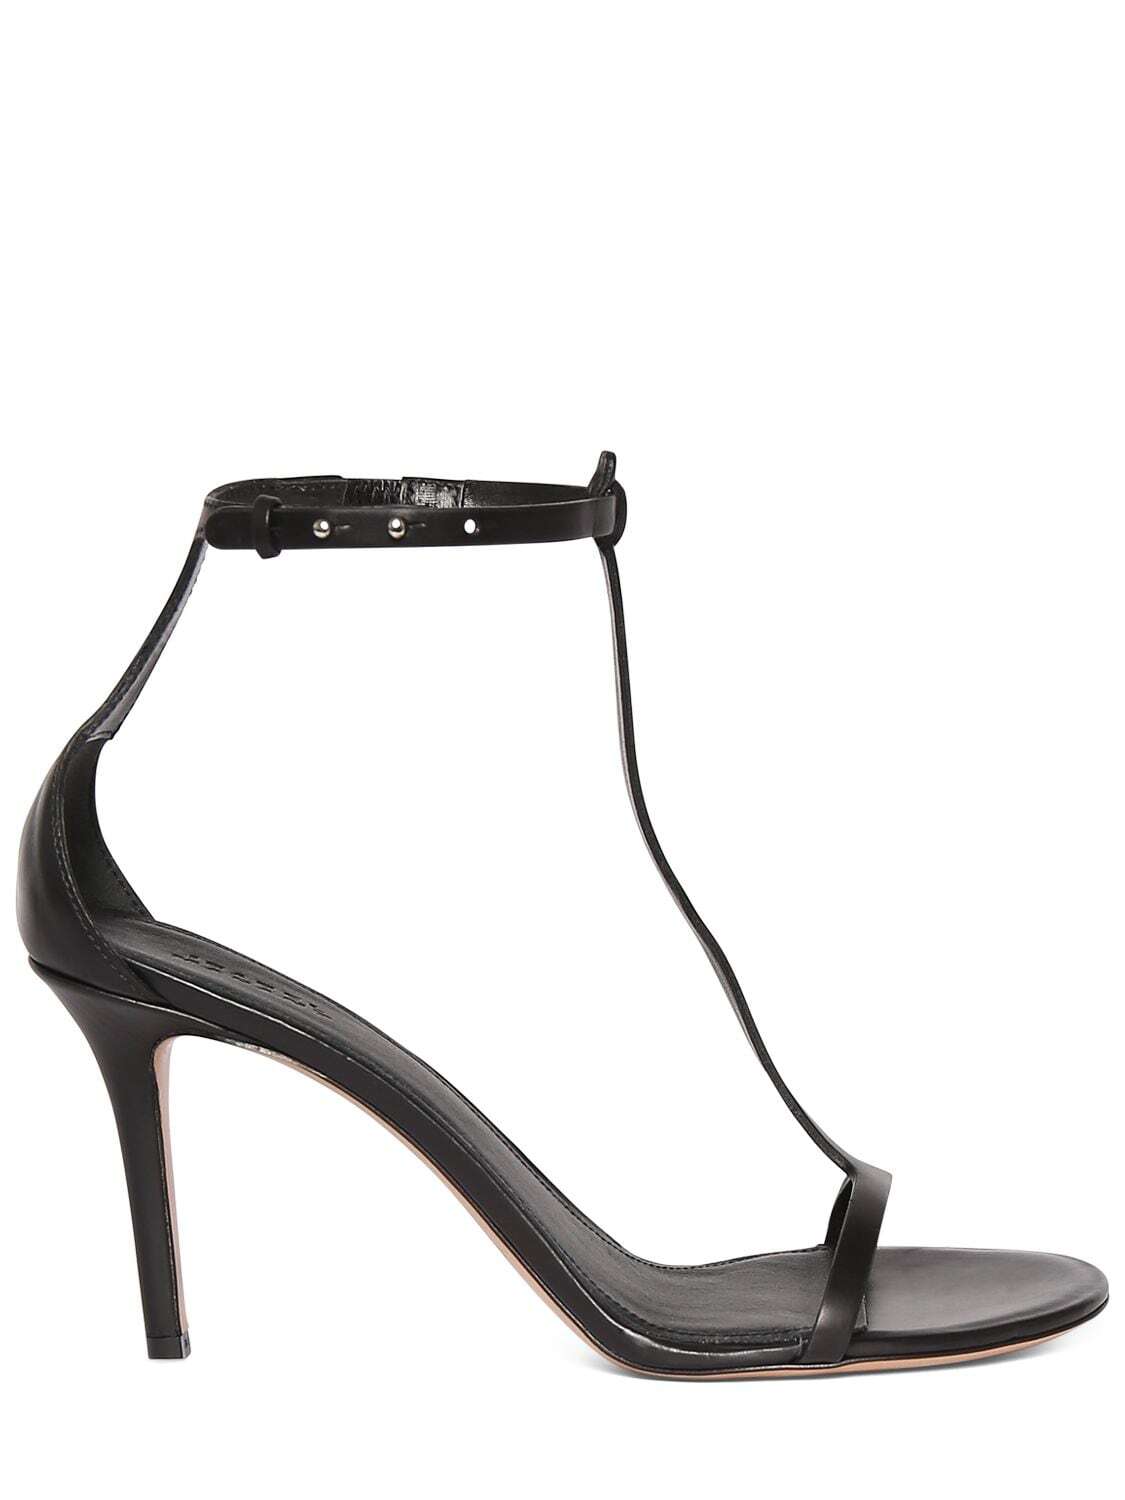 ISABEL MARANT 85mm Einari-gd Leather High Heel Sandals in black